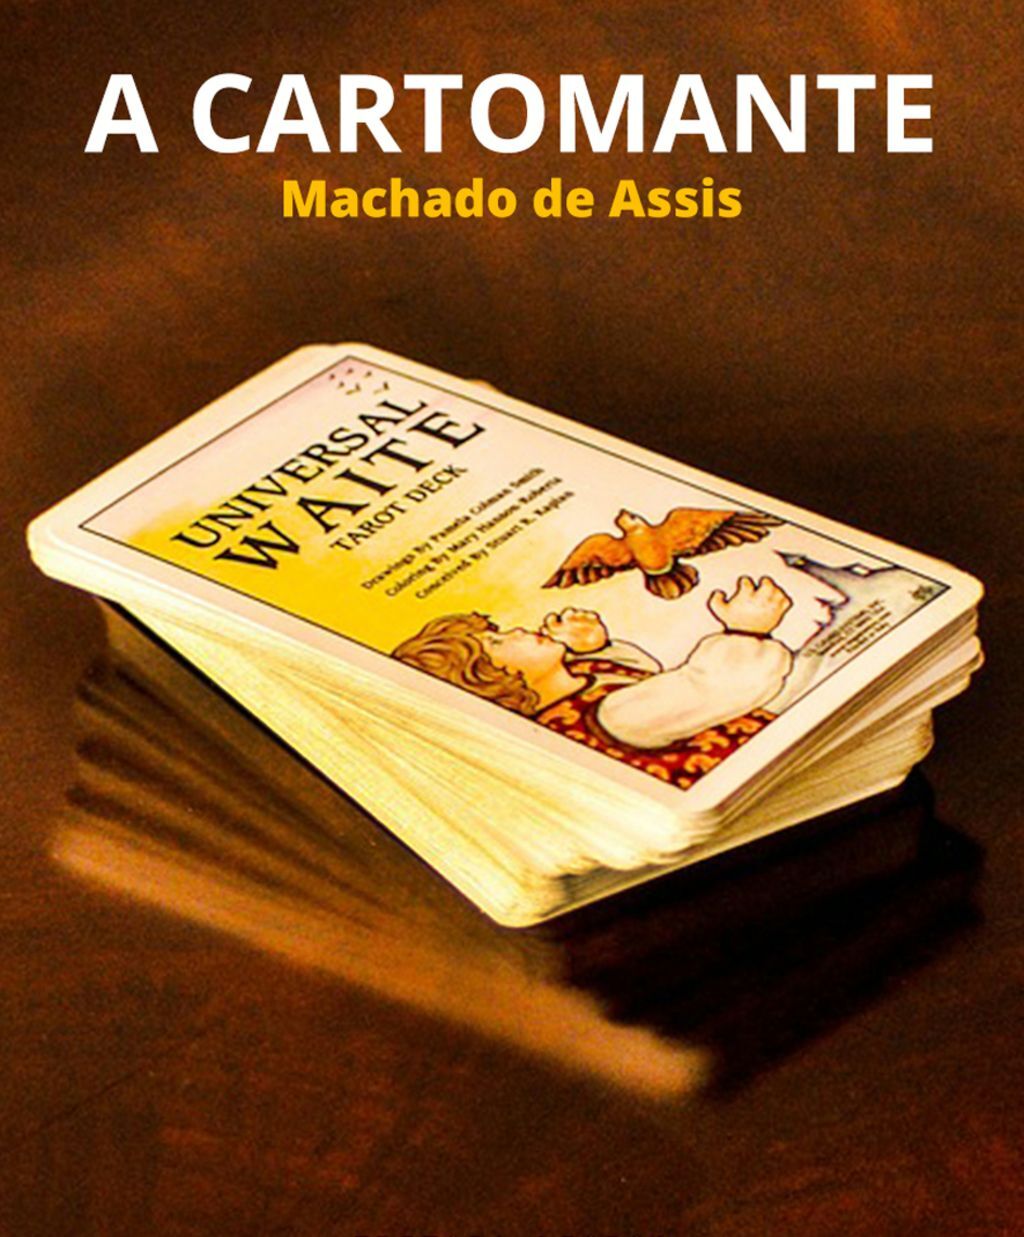 A Cartomante by Machado de Assis